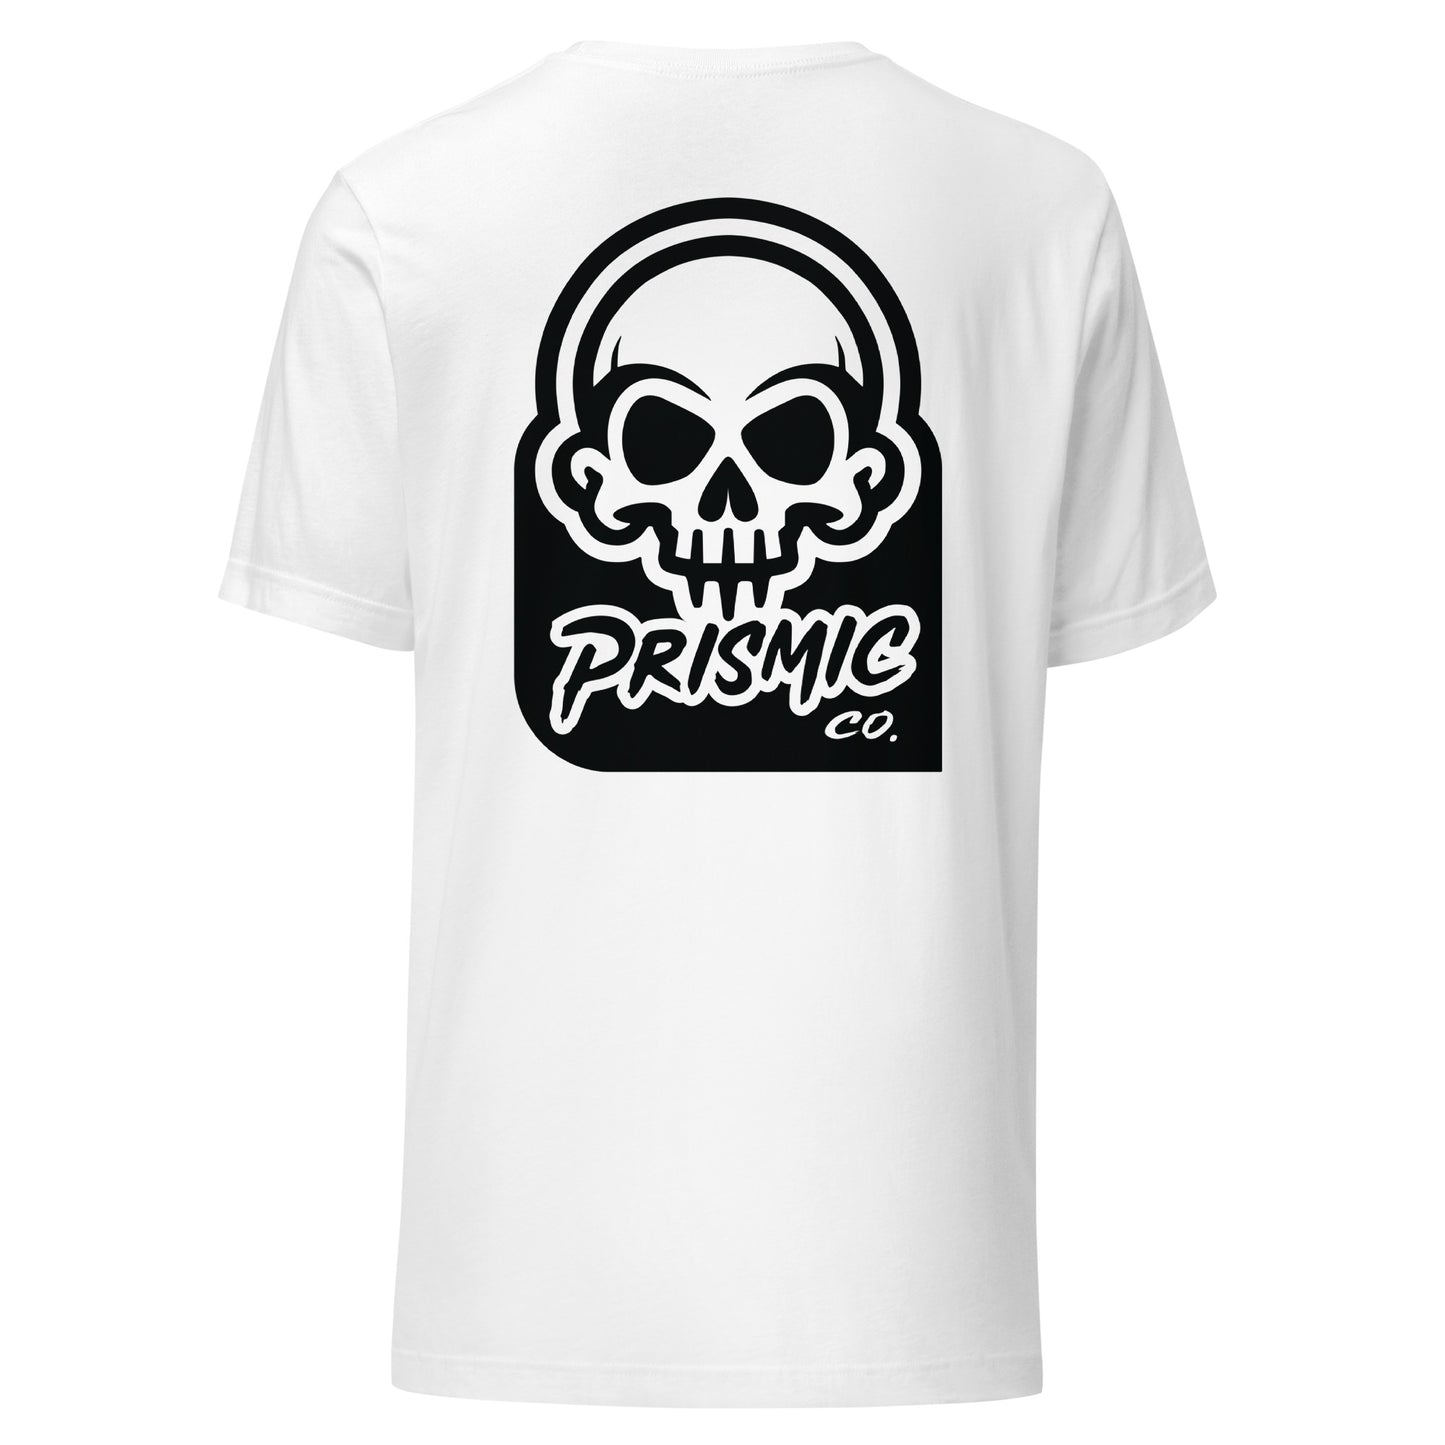 Prismic Co. Black Logo T-Shirt